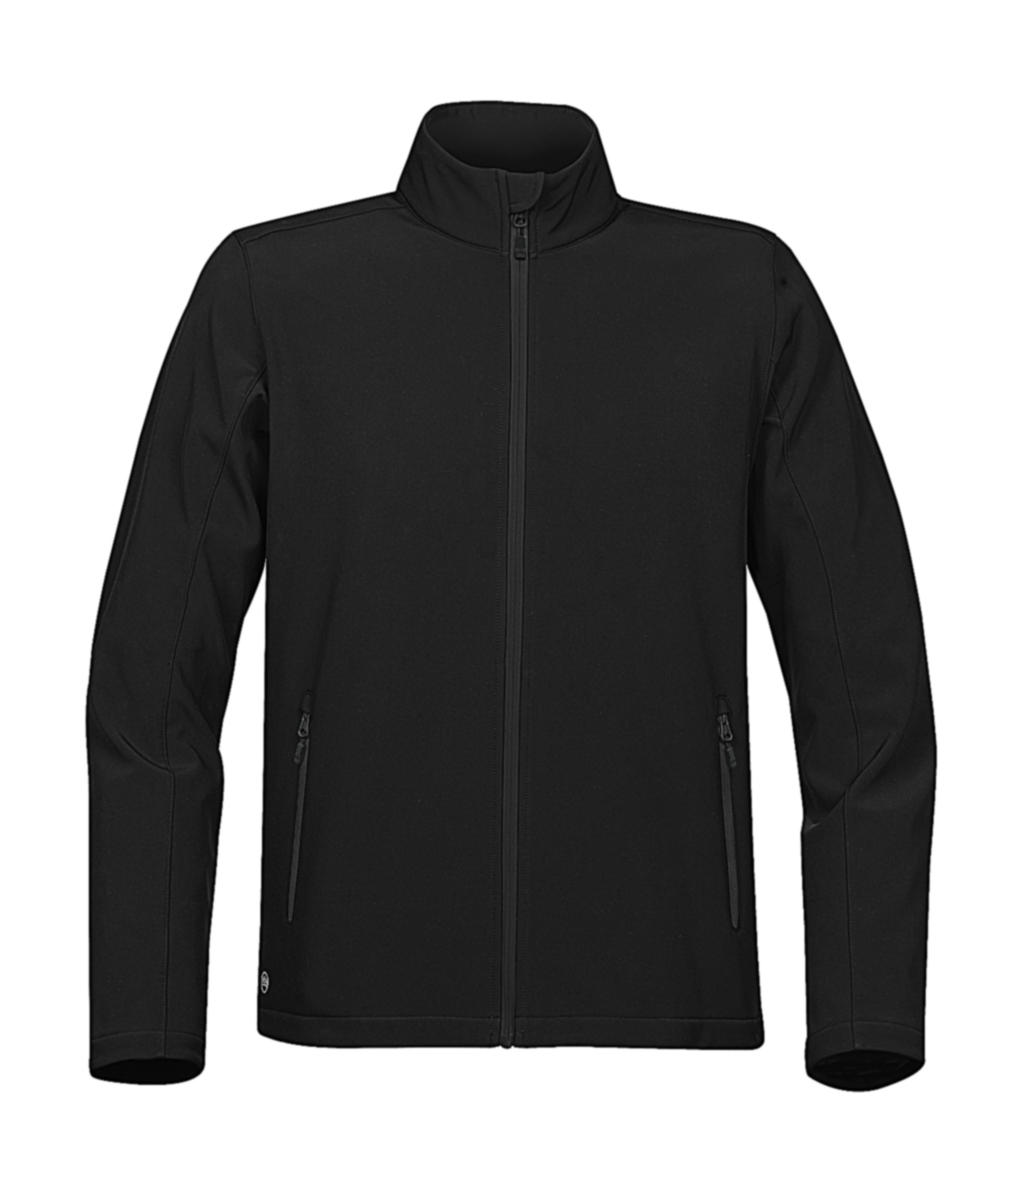  Orbiter Softshell Jacket in Farbe Black/Carbon